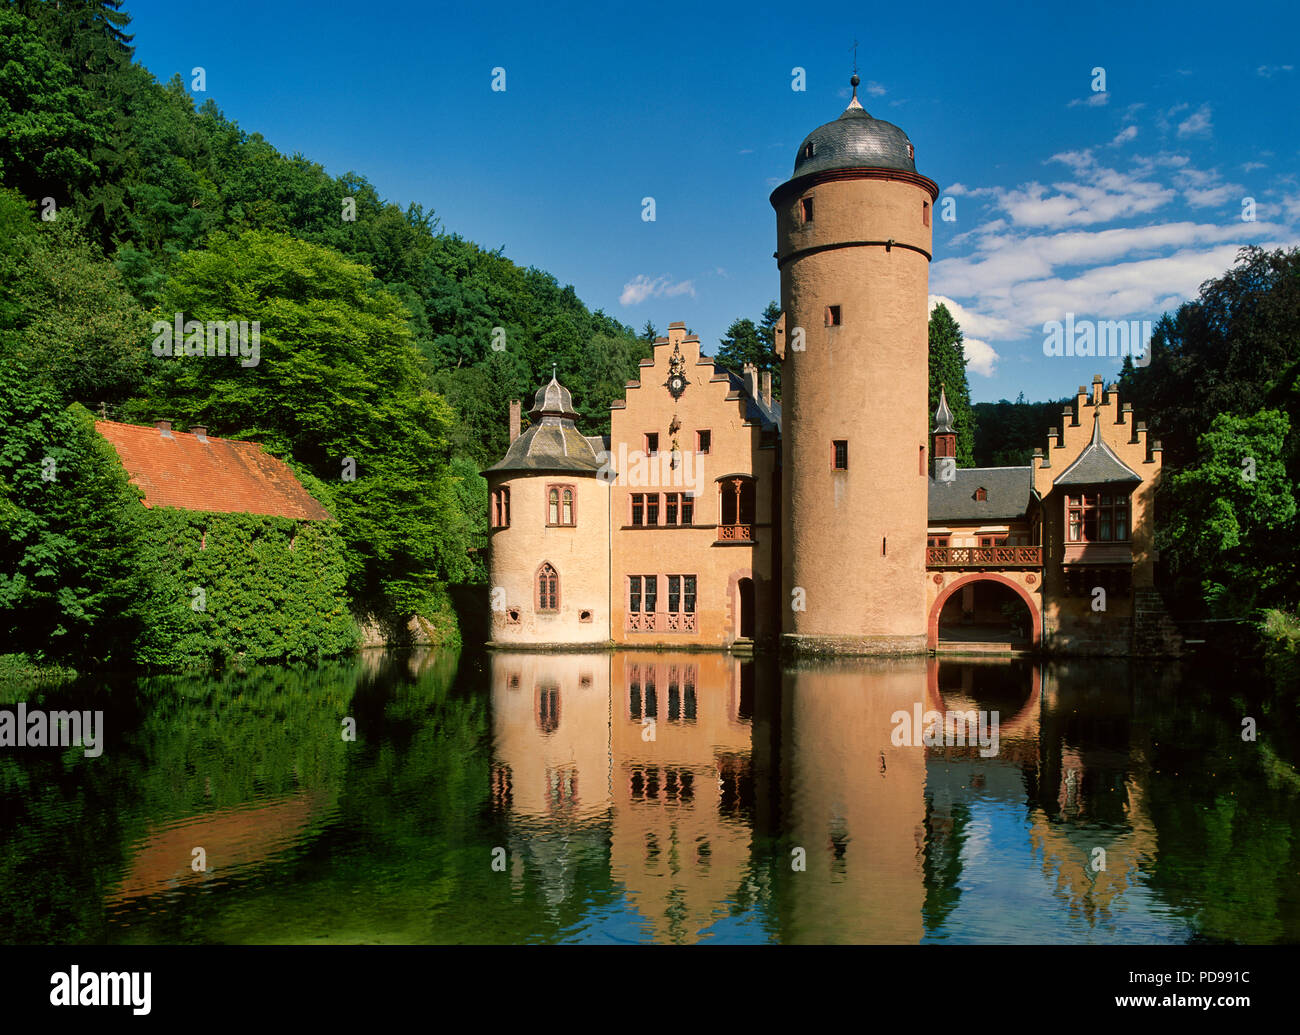 Water castle Mespelbrunn in the Spessart, Aschaffenburg District, Lower Franconia, Bavaria, Germany Stock Photo